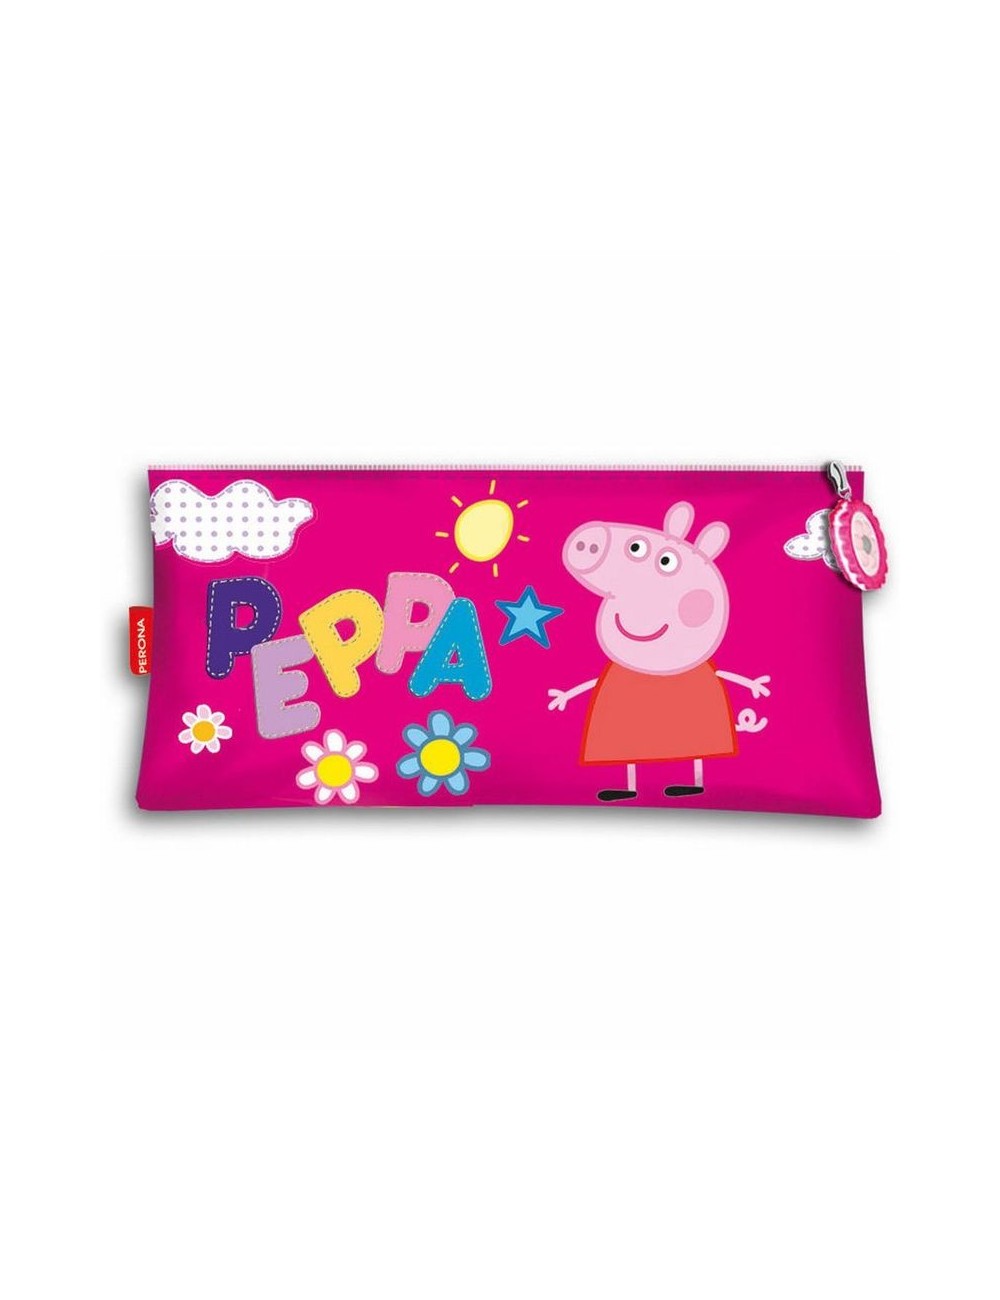 Penar Peppa Pig, fucsia, 21 x 11 cm